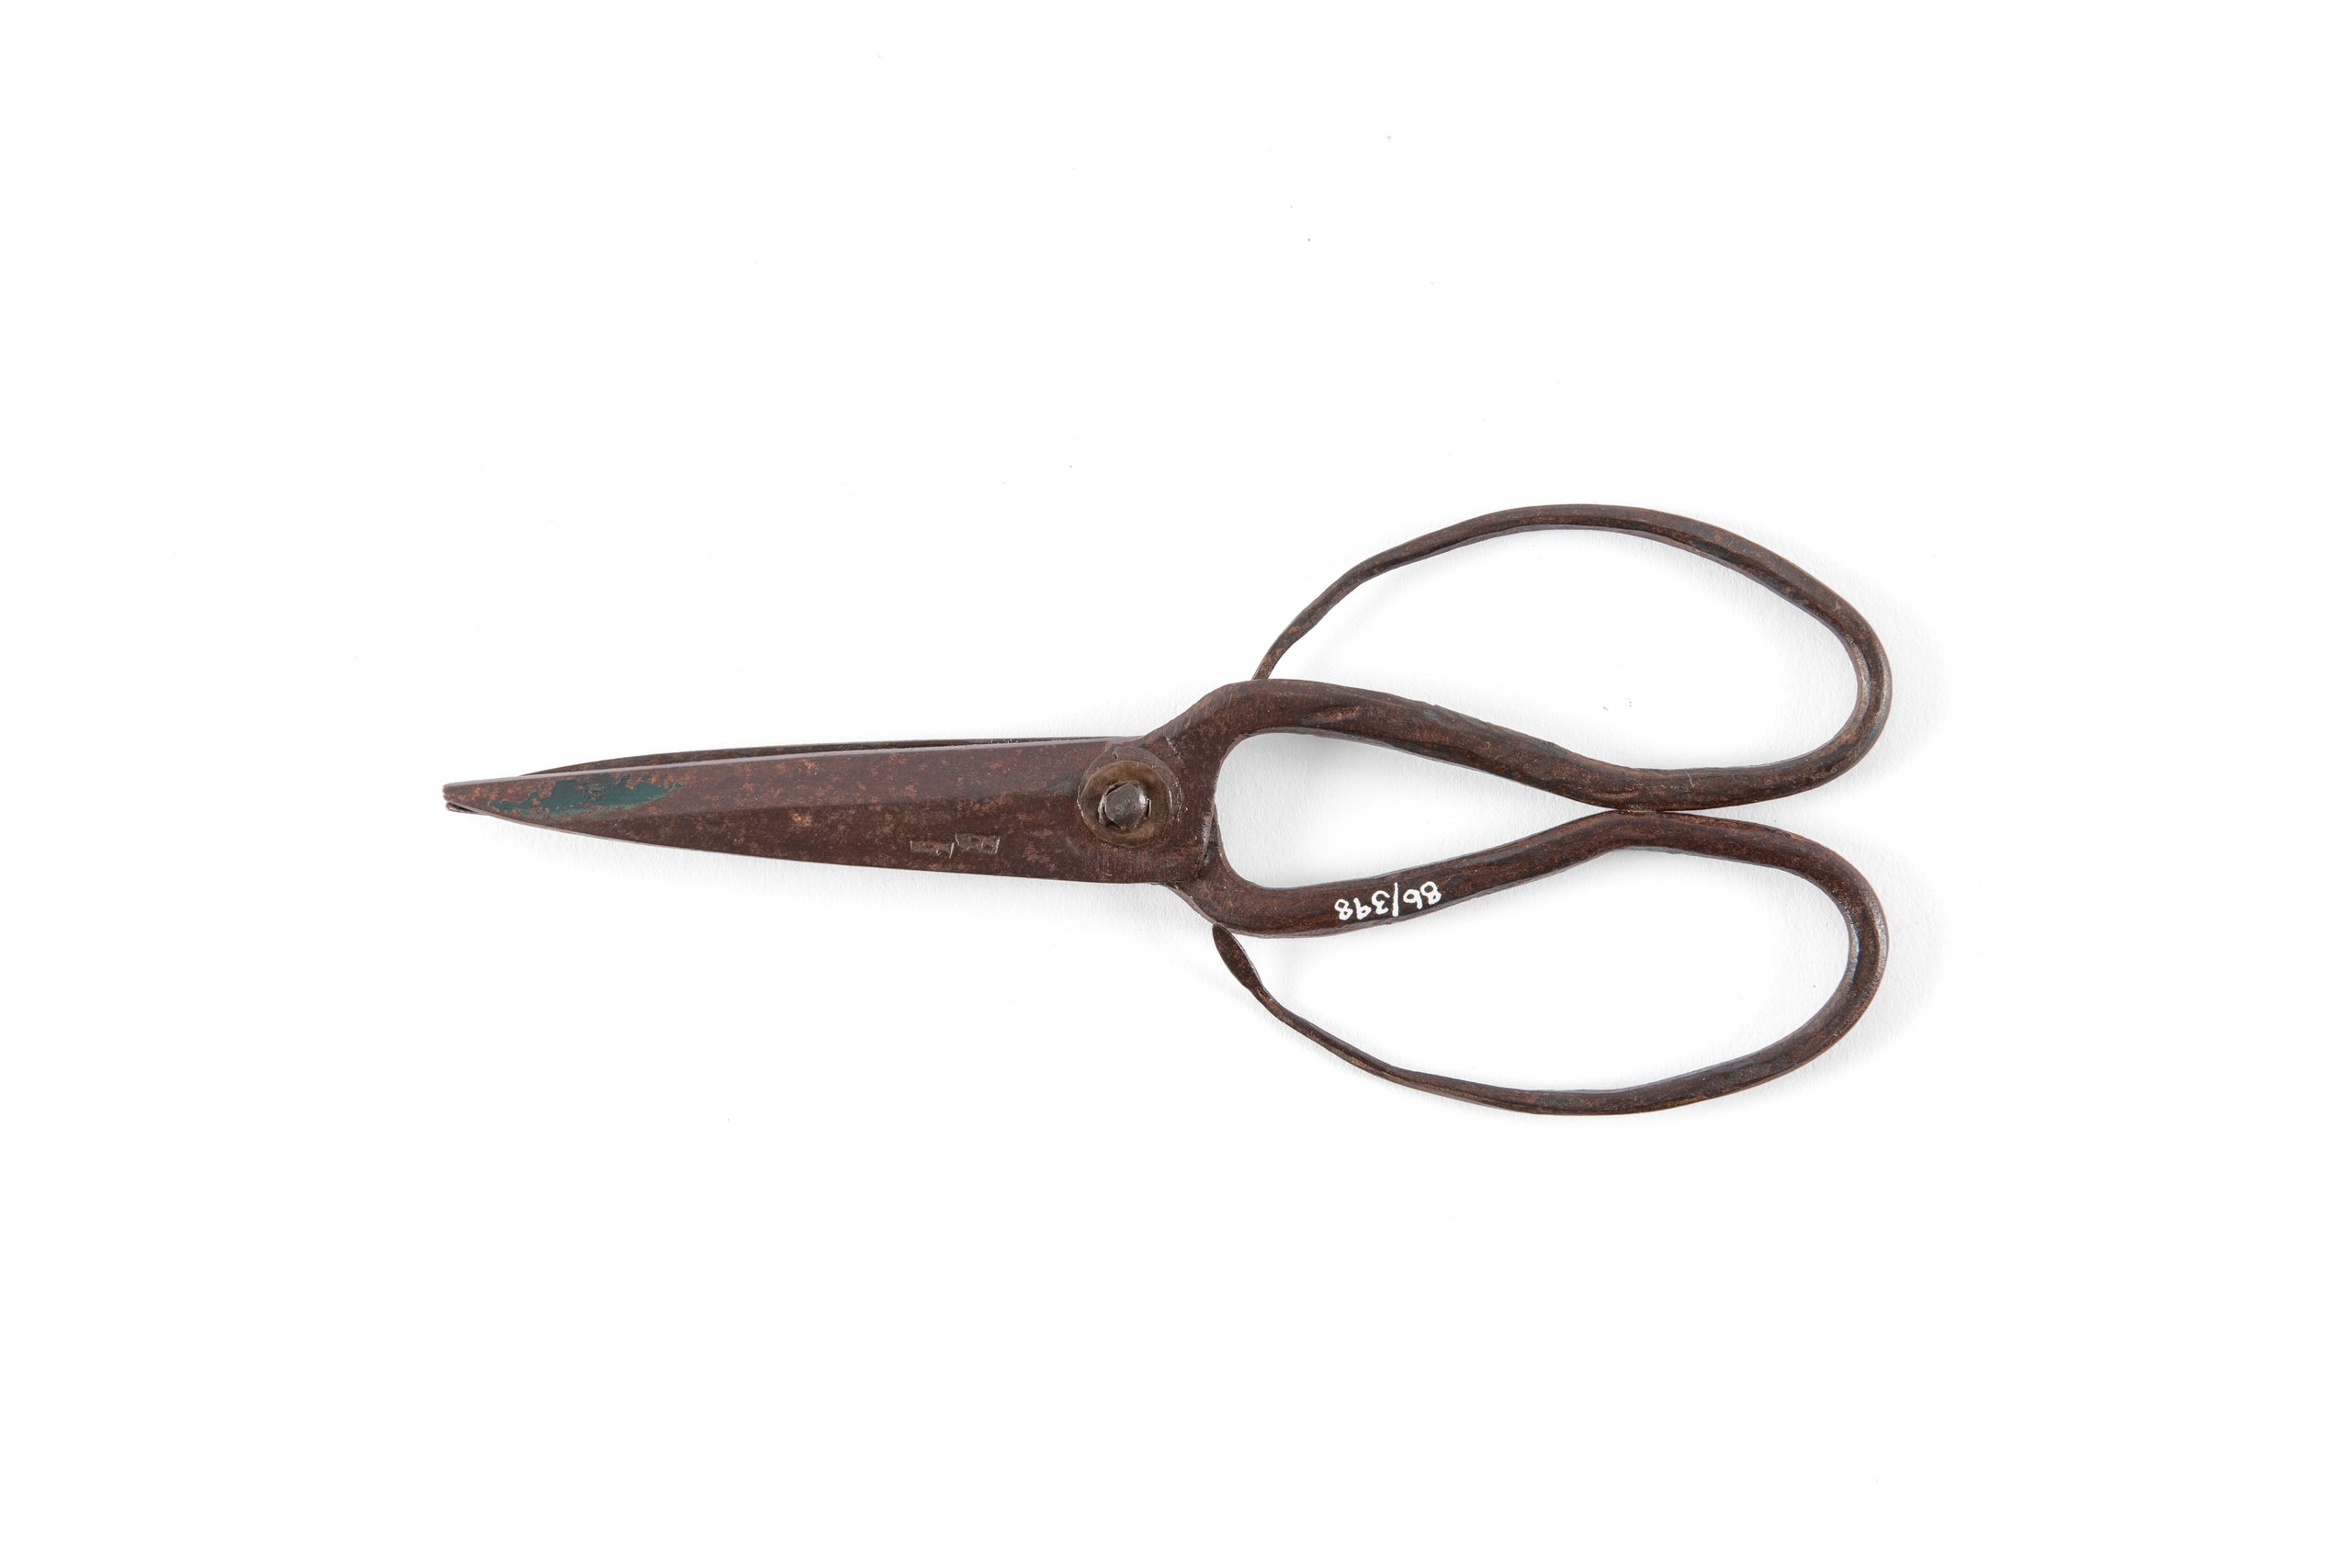 Hand-forged iron scissors